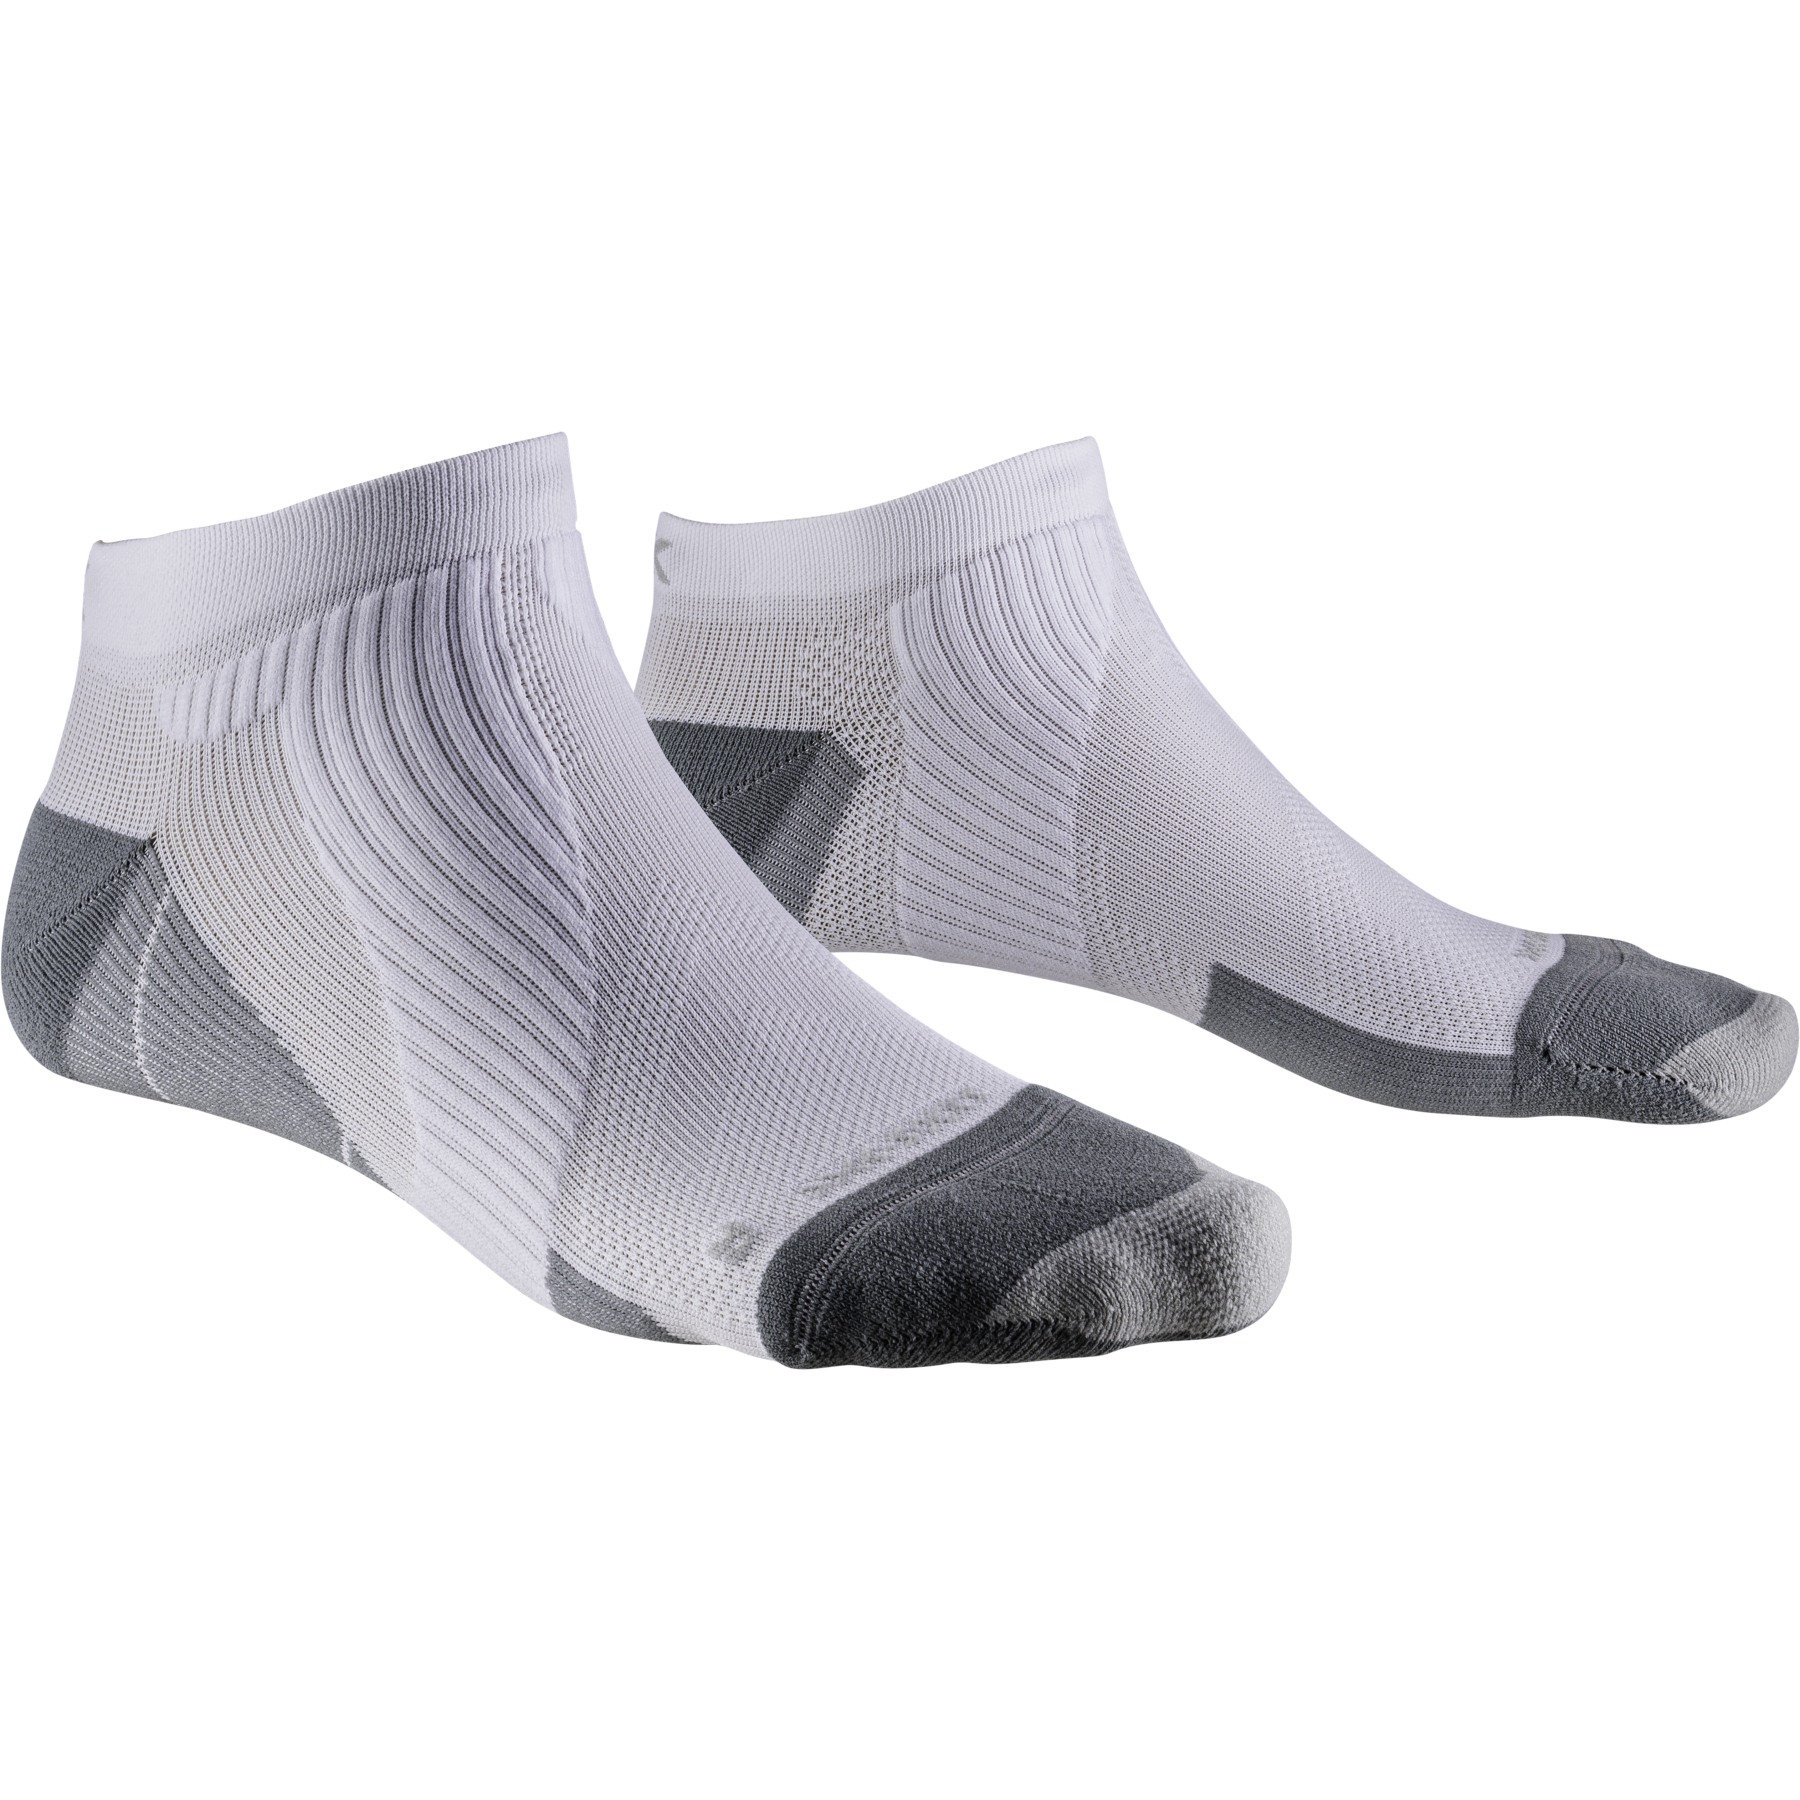 Produktbild von X-Socks Run Perform Low Cut Laufsocken - arctic white/pearl grey